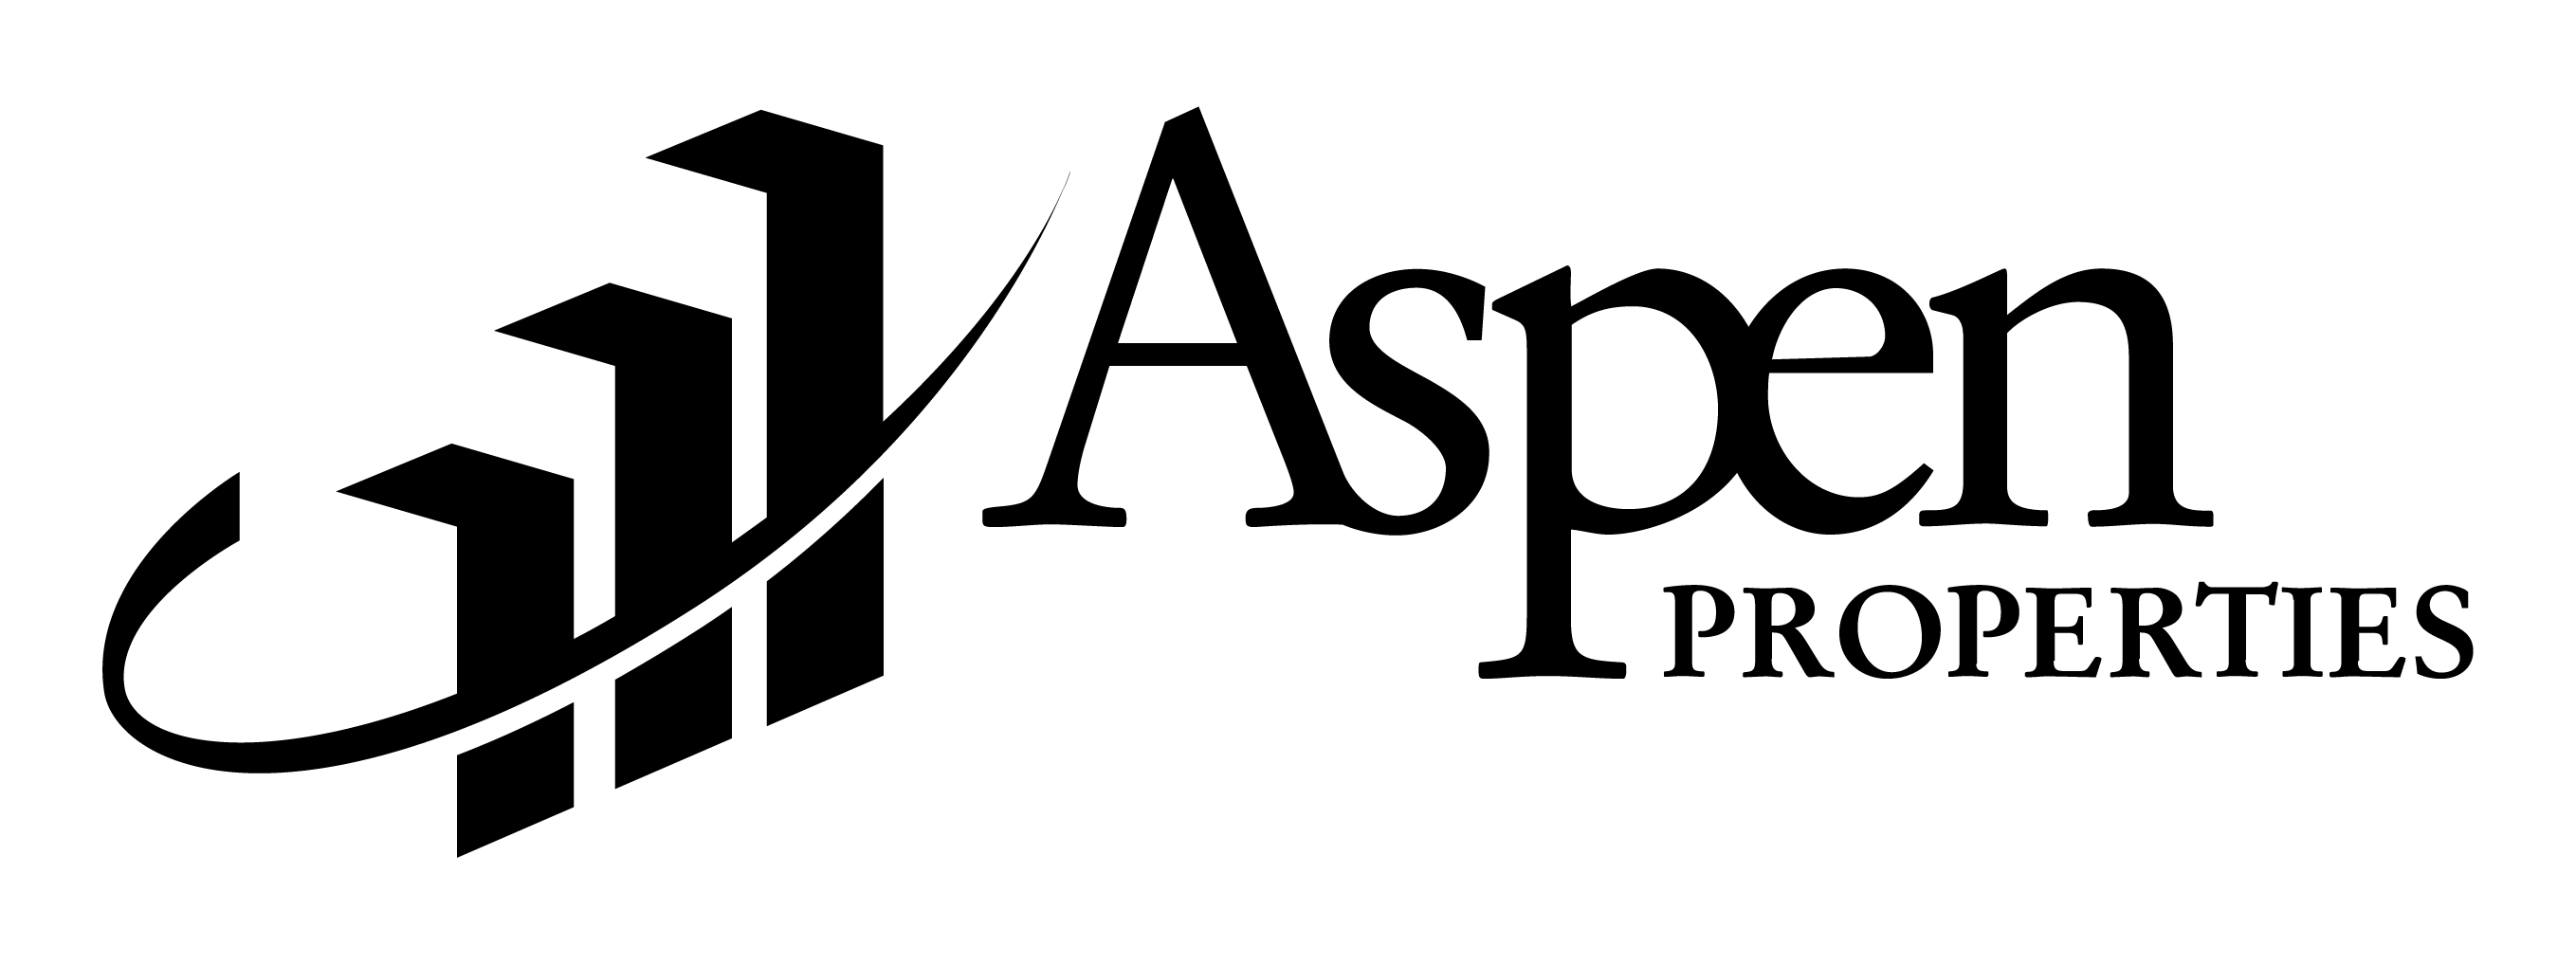 Aspen properties logo